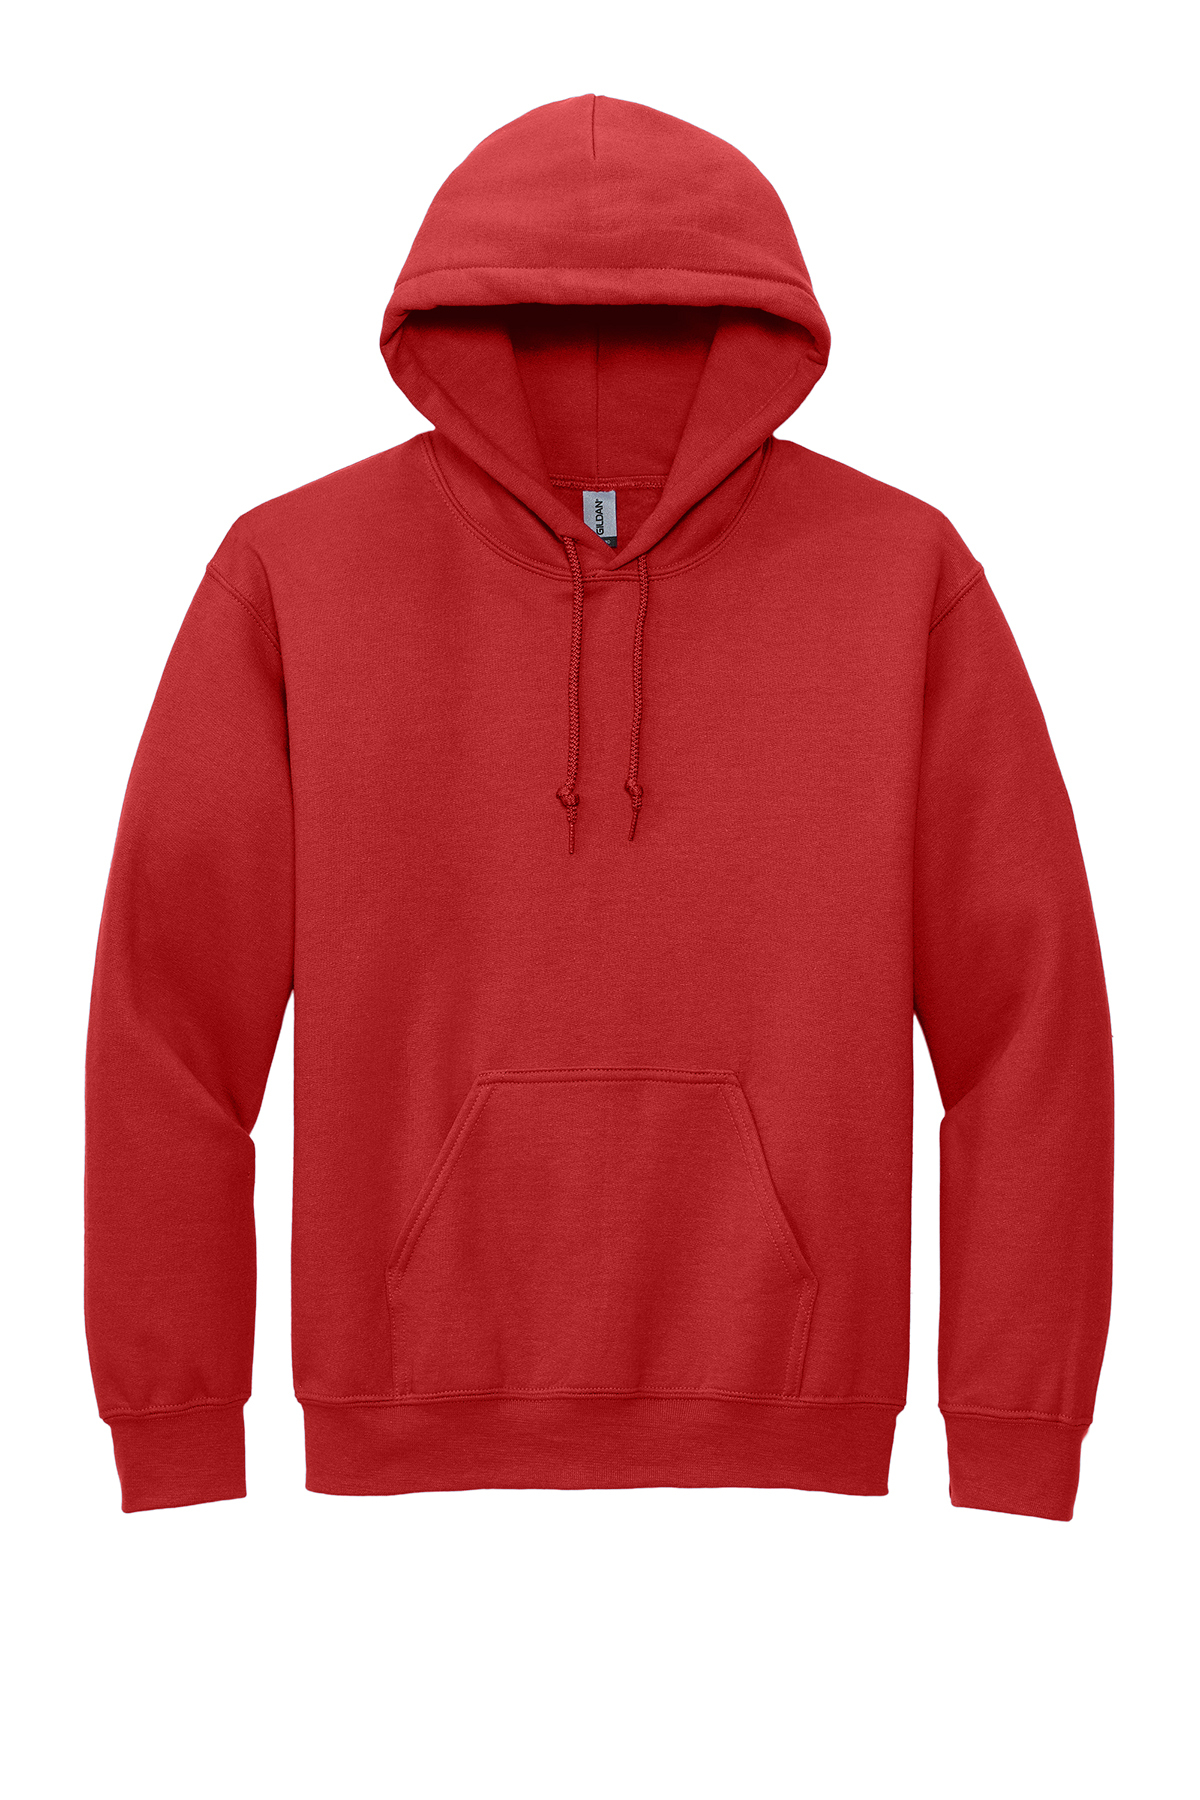 Gildan - DryBlend Hooded Sweatshirt Product | SanMar Pullover 